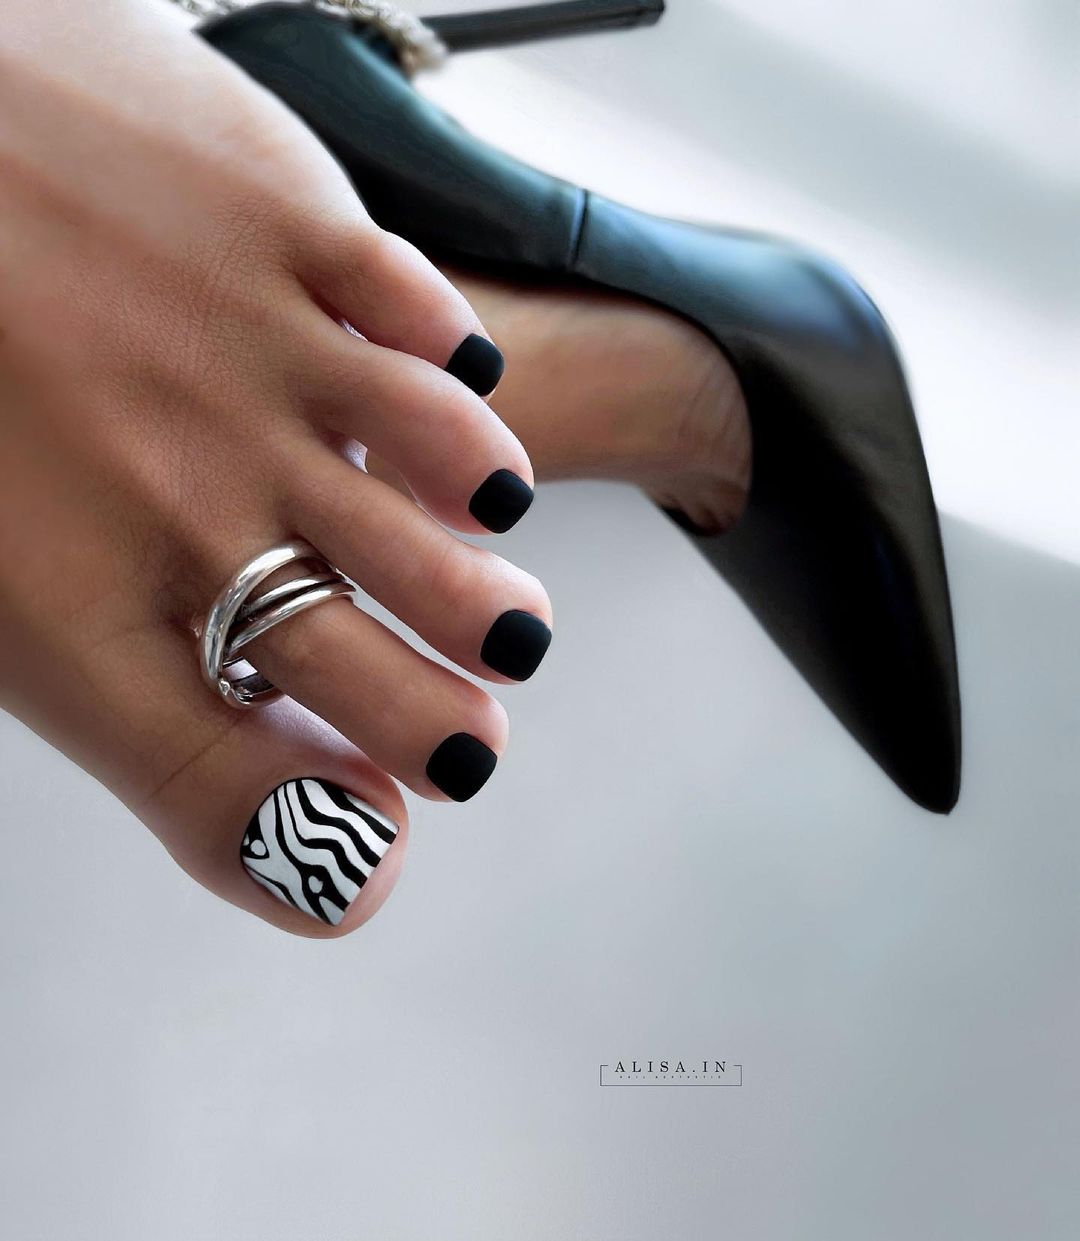 Black and White Pedicure with Zebra Design on Big Toe